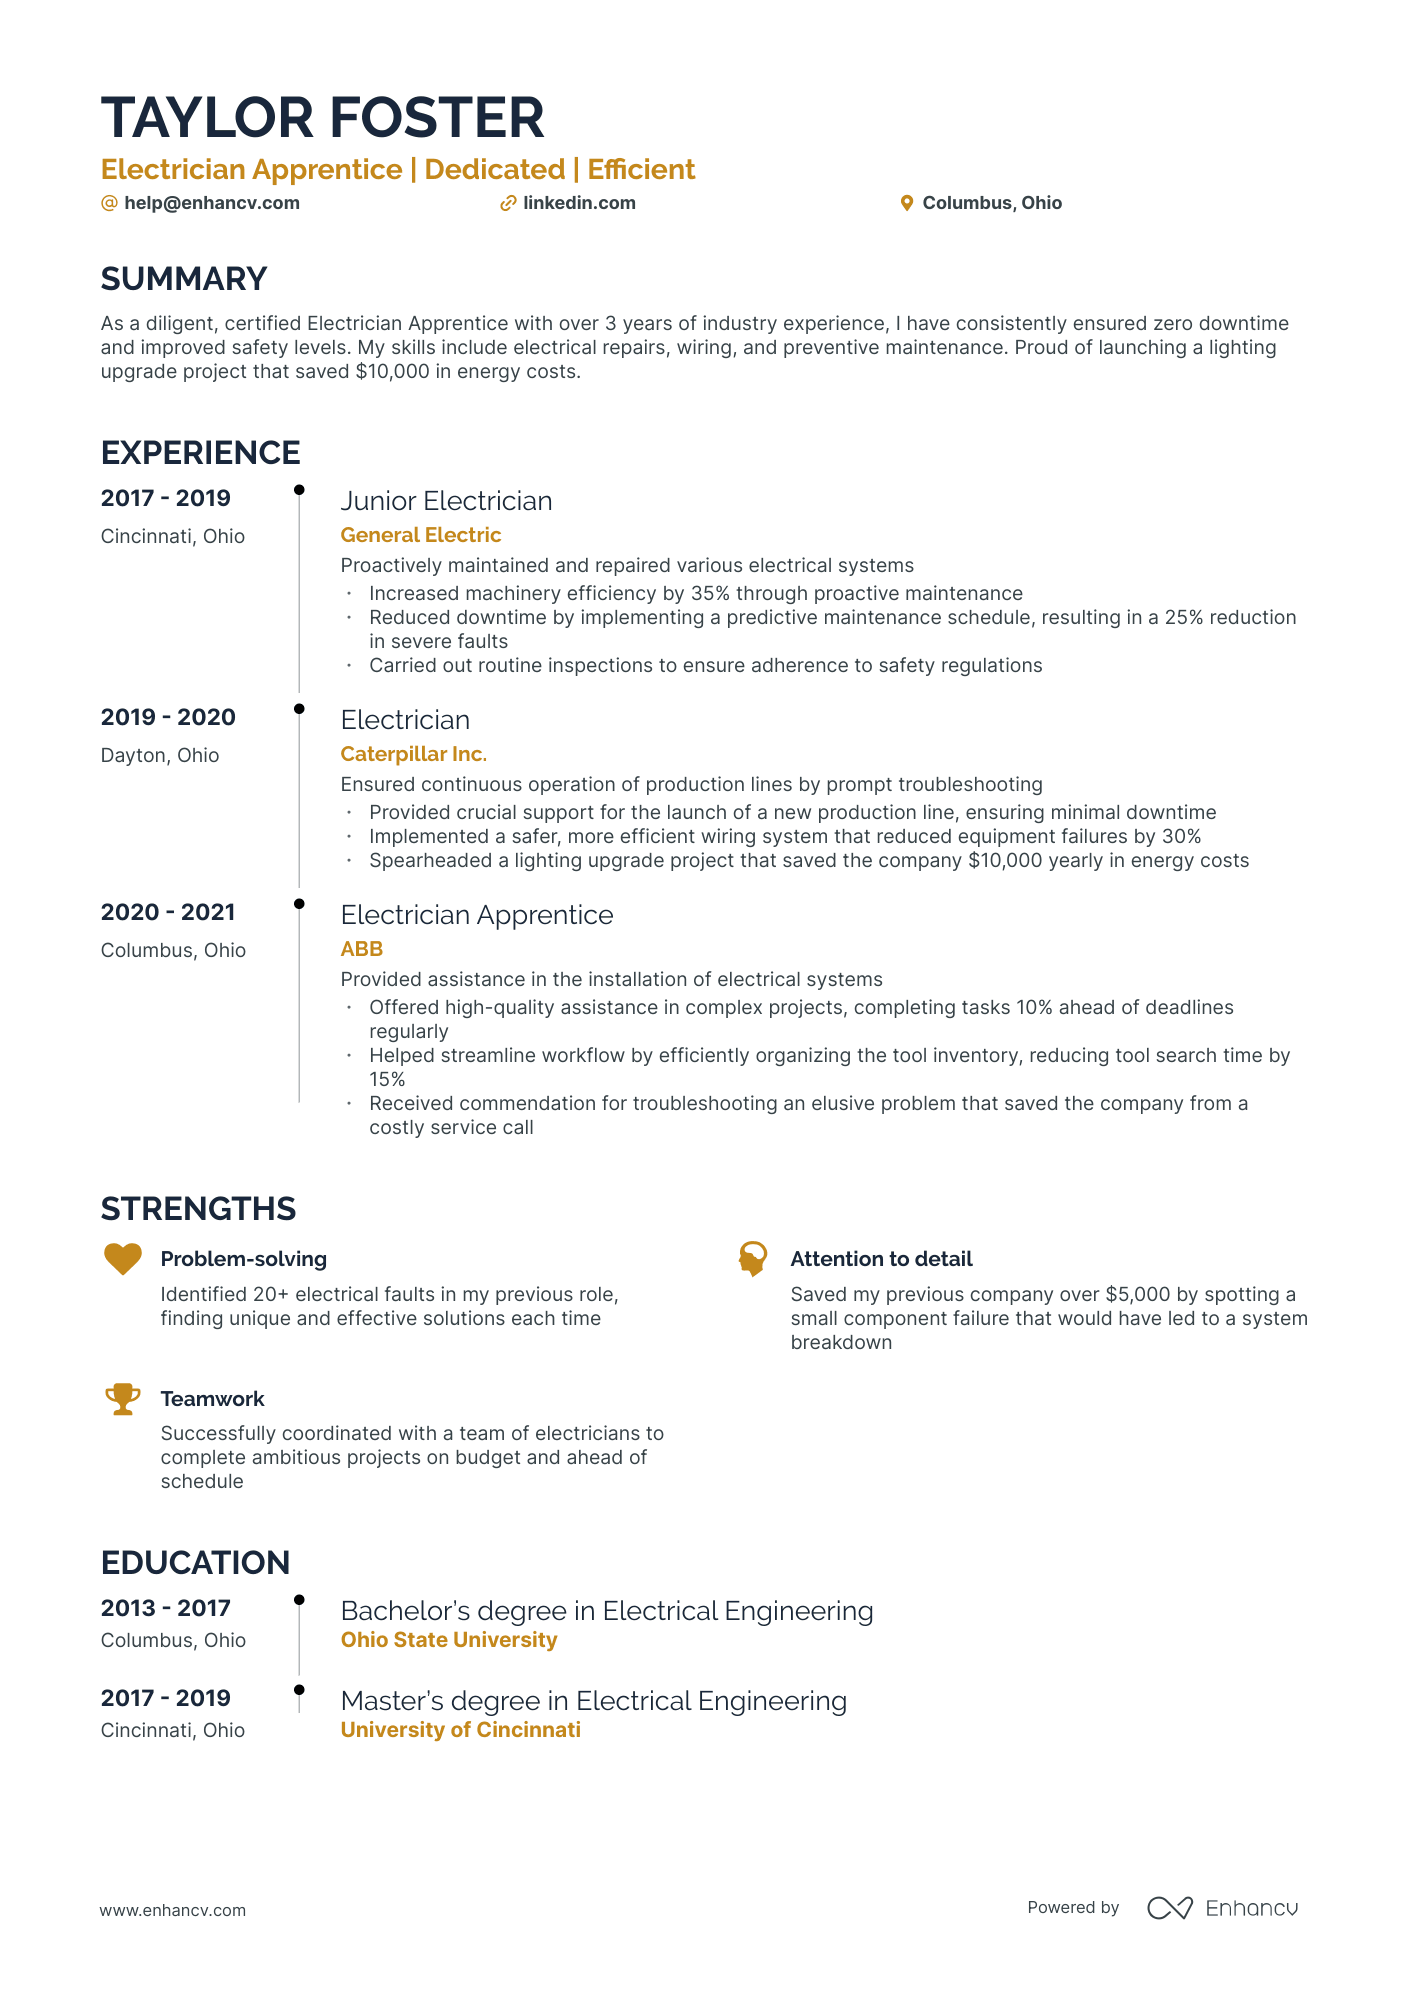 sample resume objective for electrician apprentice